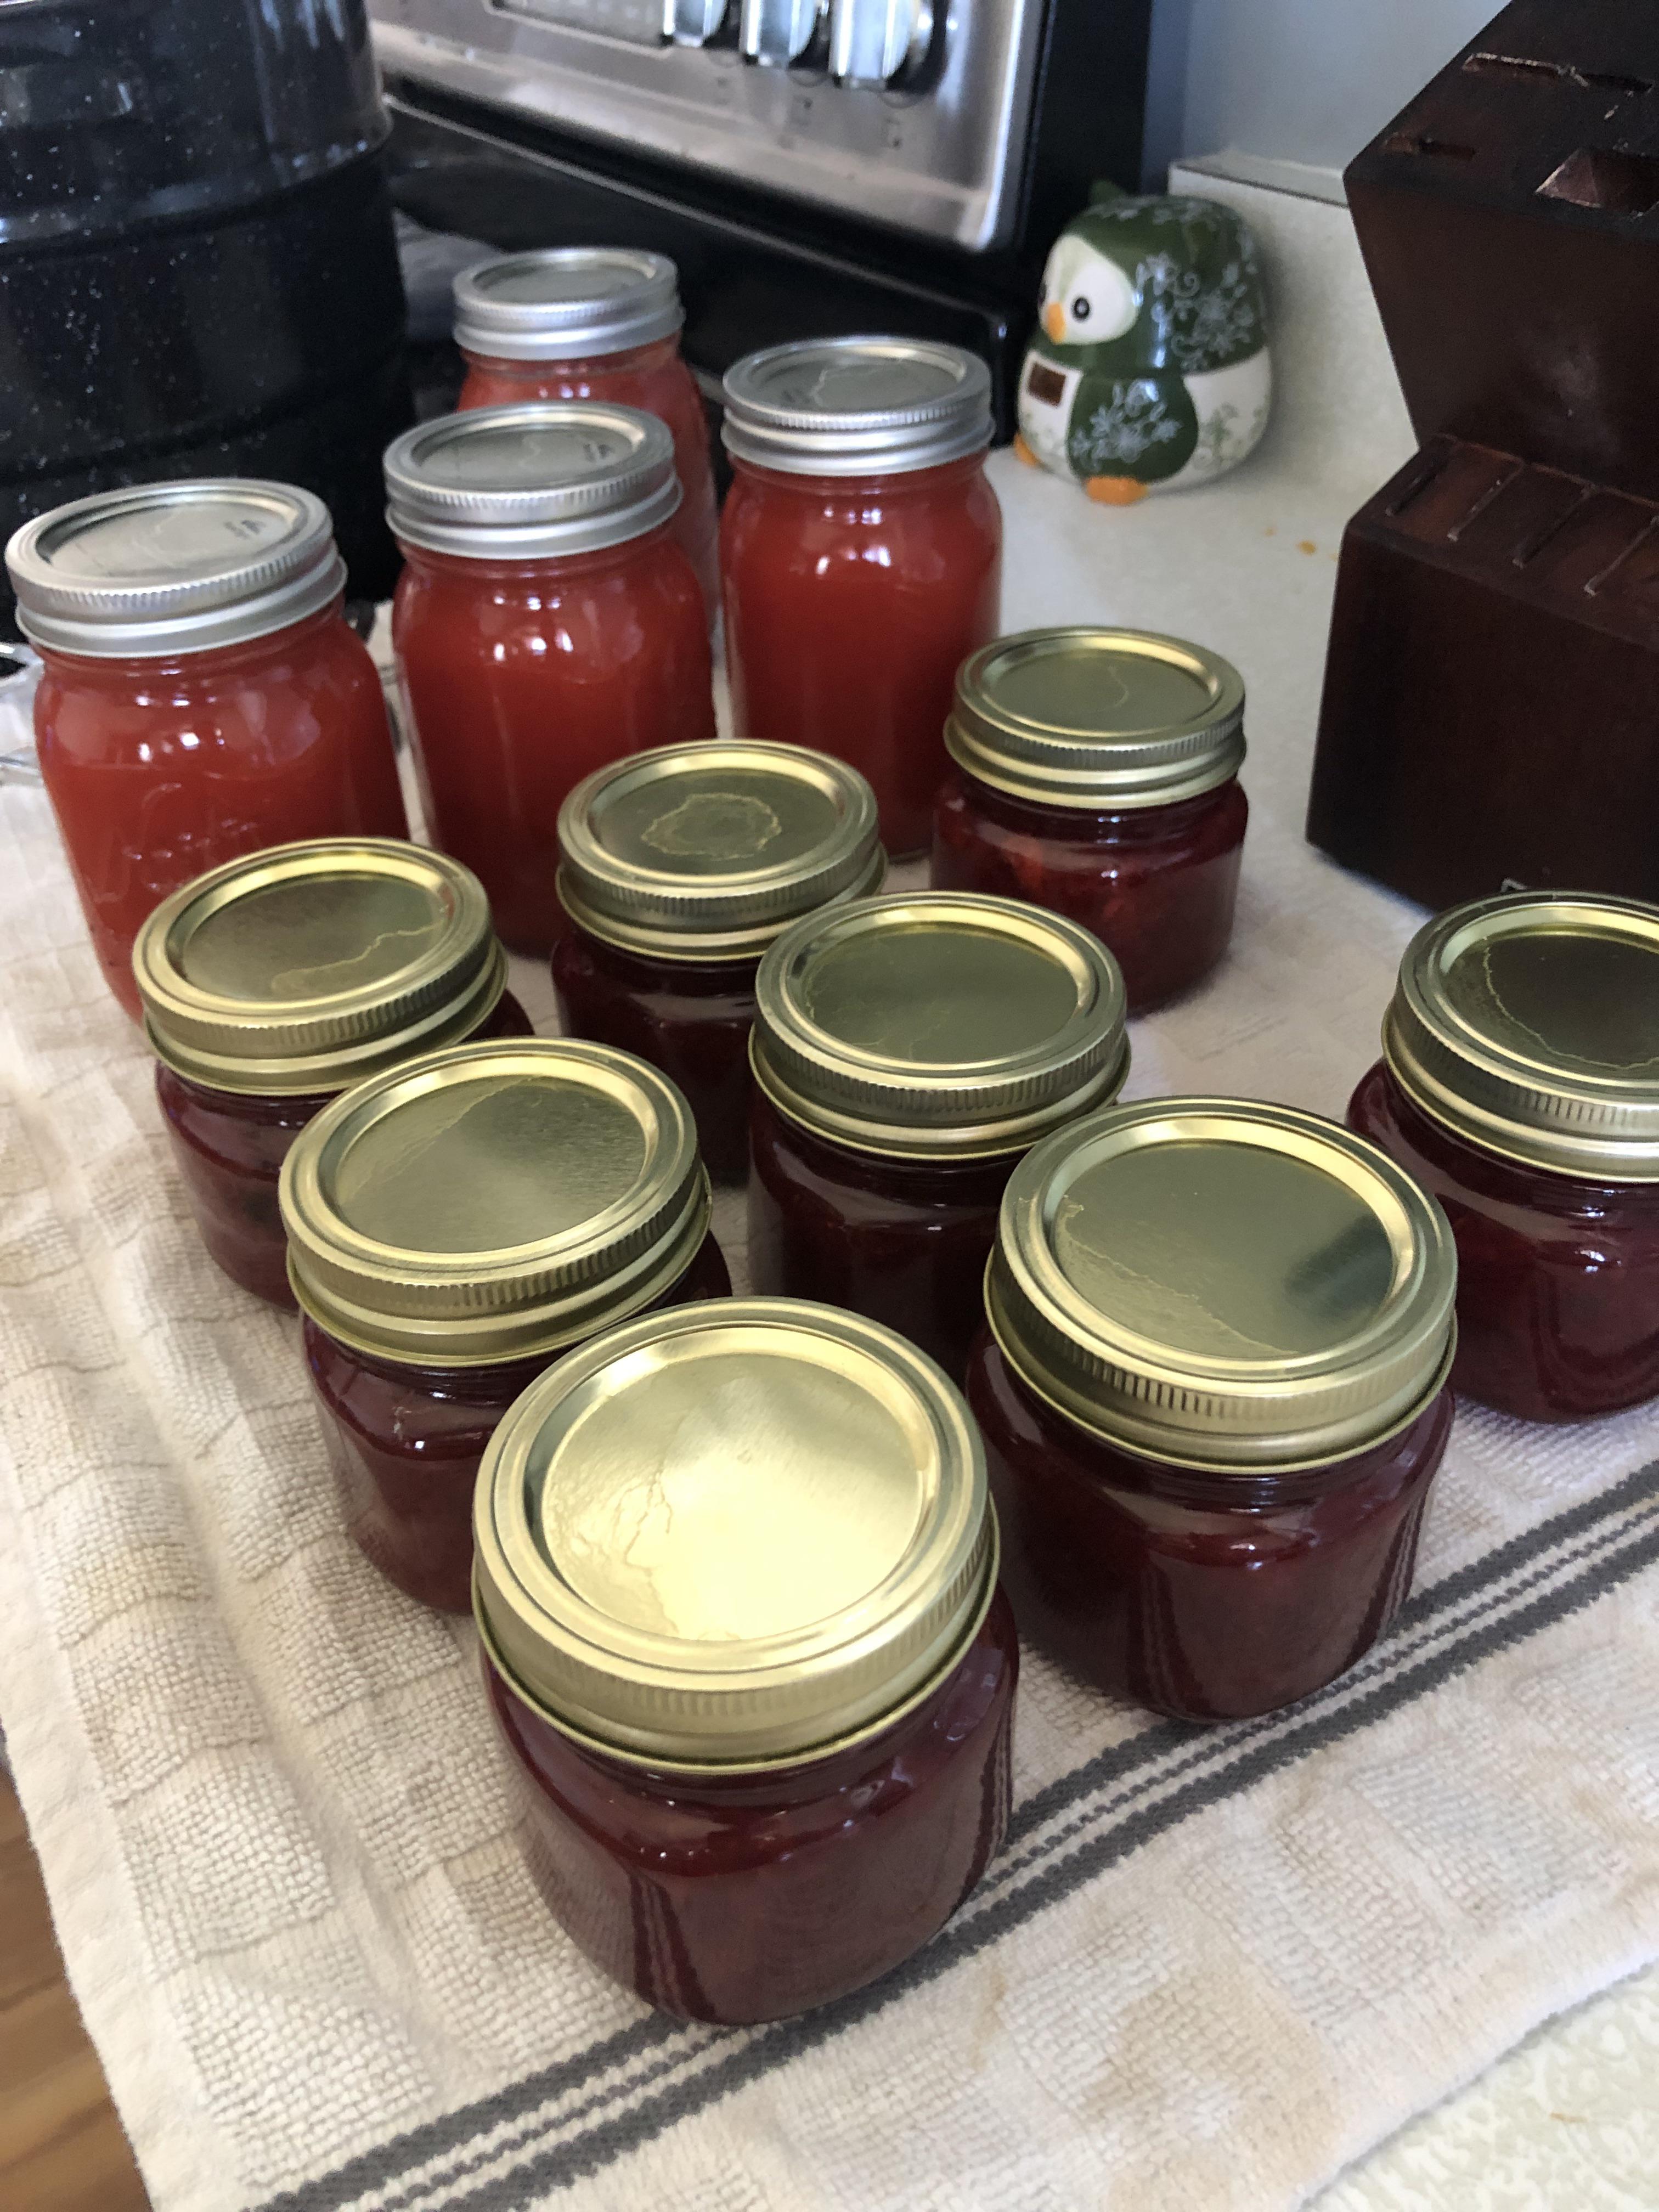 Properly sealed canning jar versus poorly sealed jar